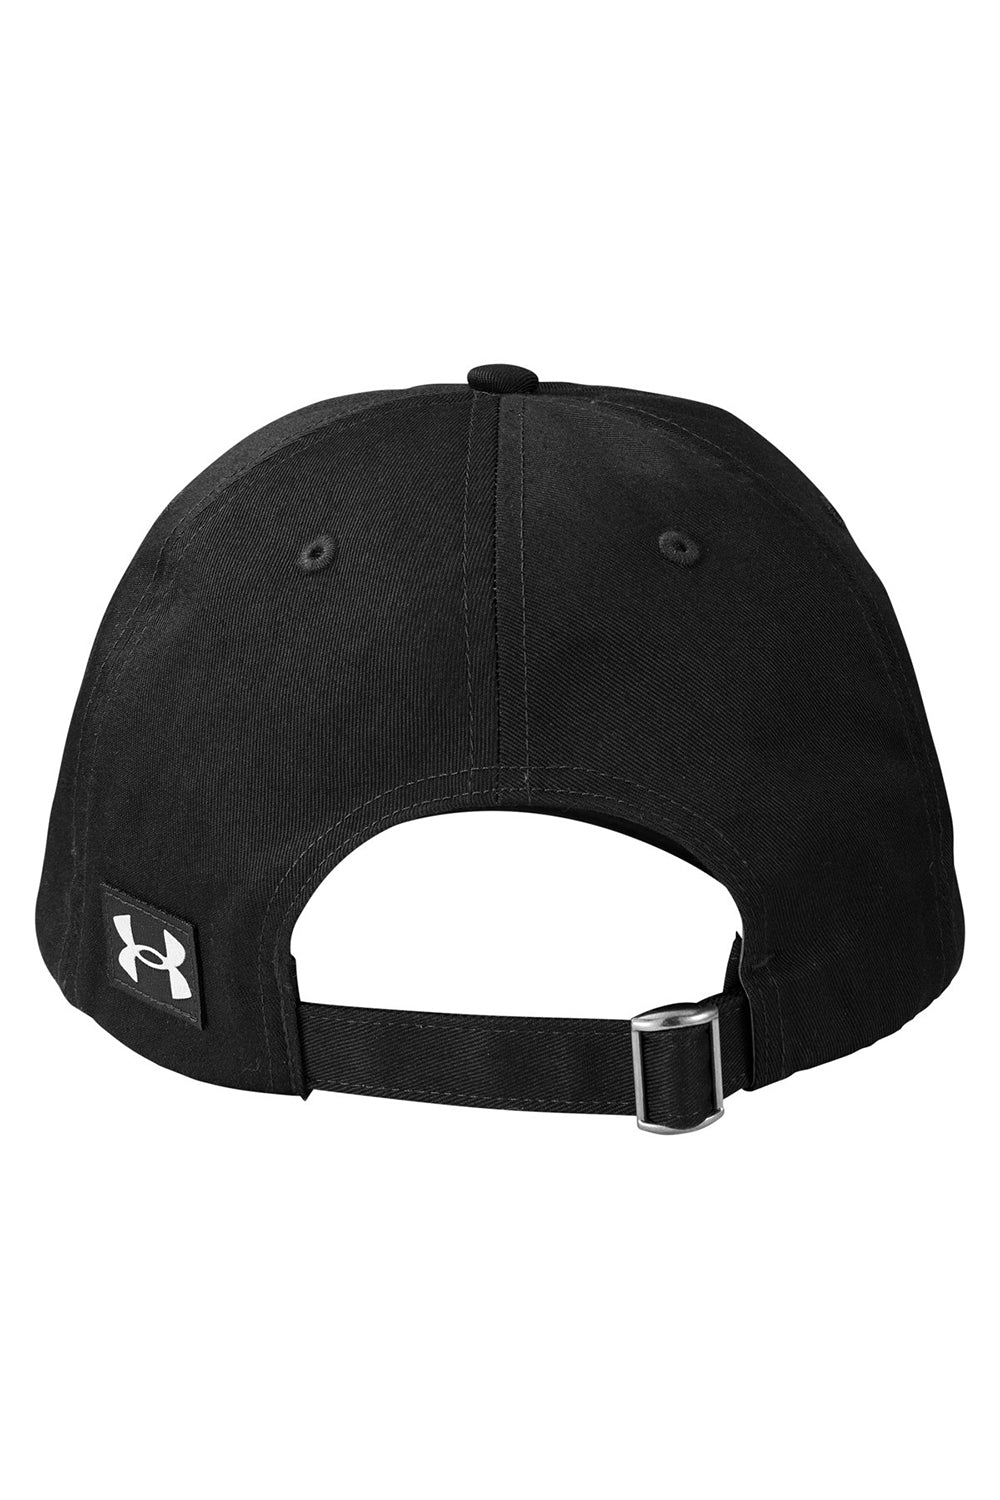 Under Armour 1369785  Moisture Wicking Team Chino Adjustable Hat Black Flat Back